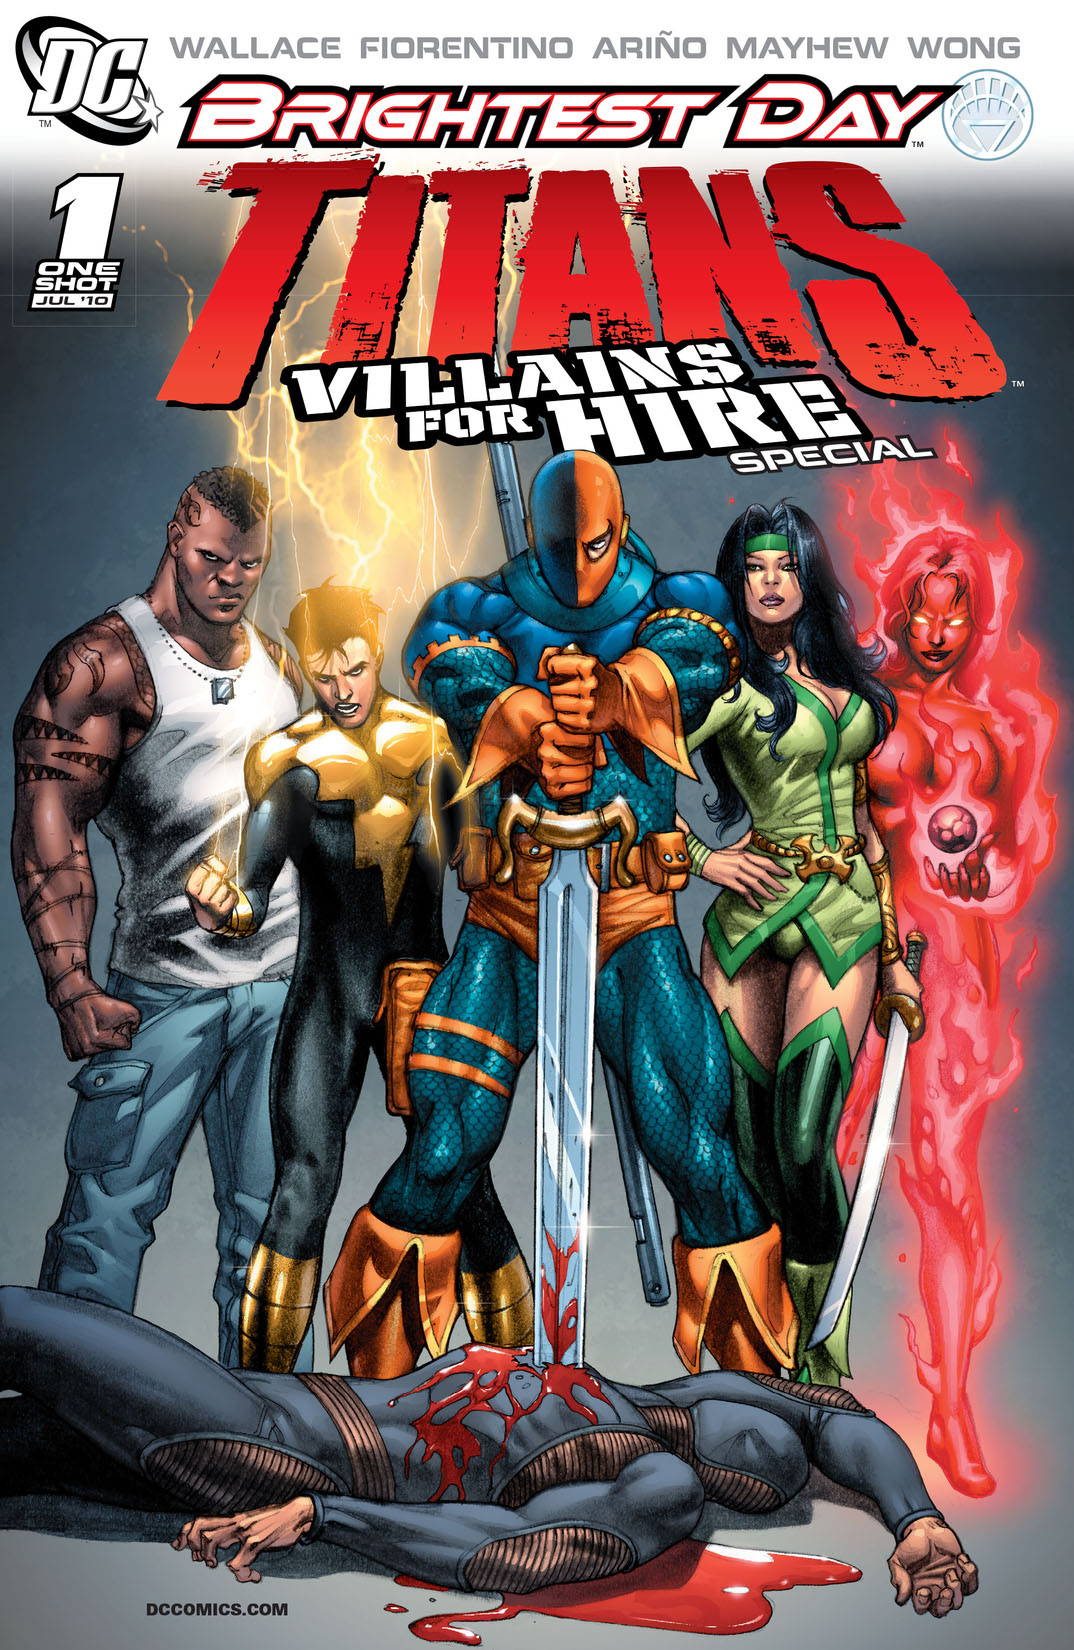 Titans: Villains for Hire Special #1 preview images